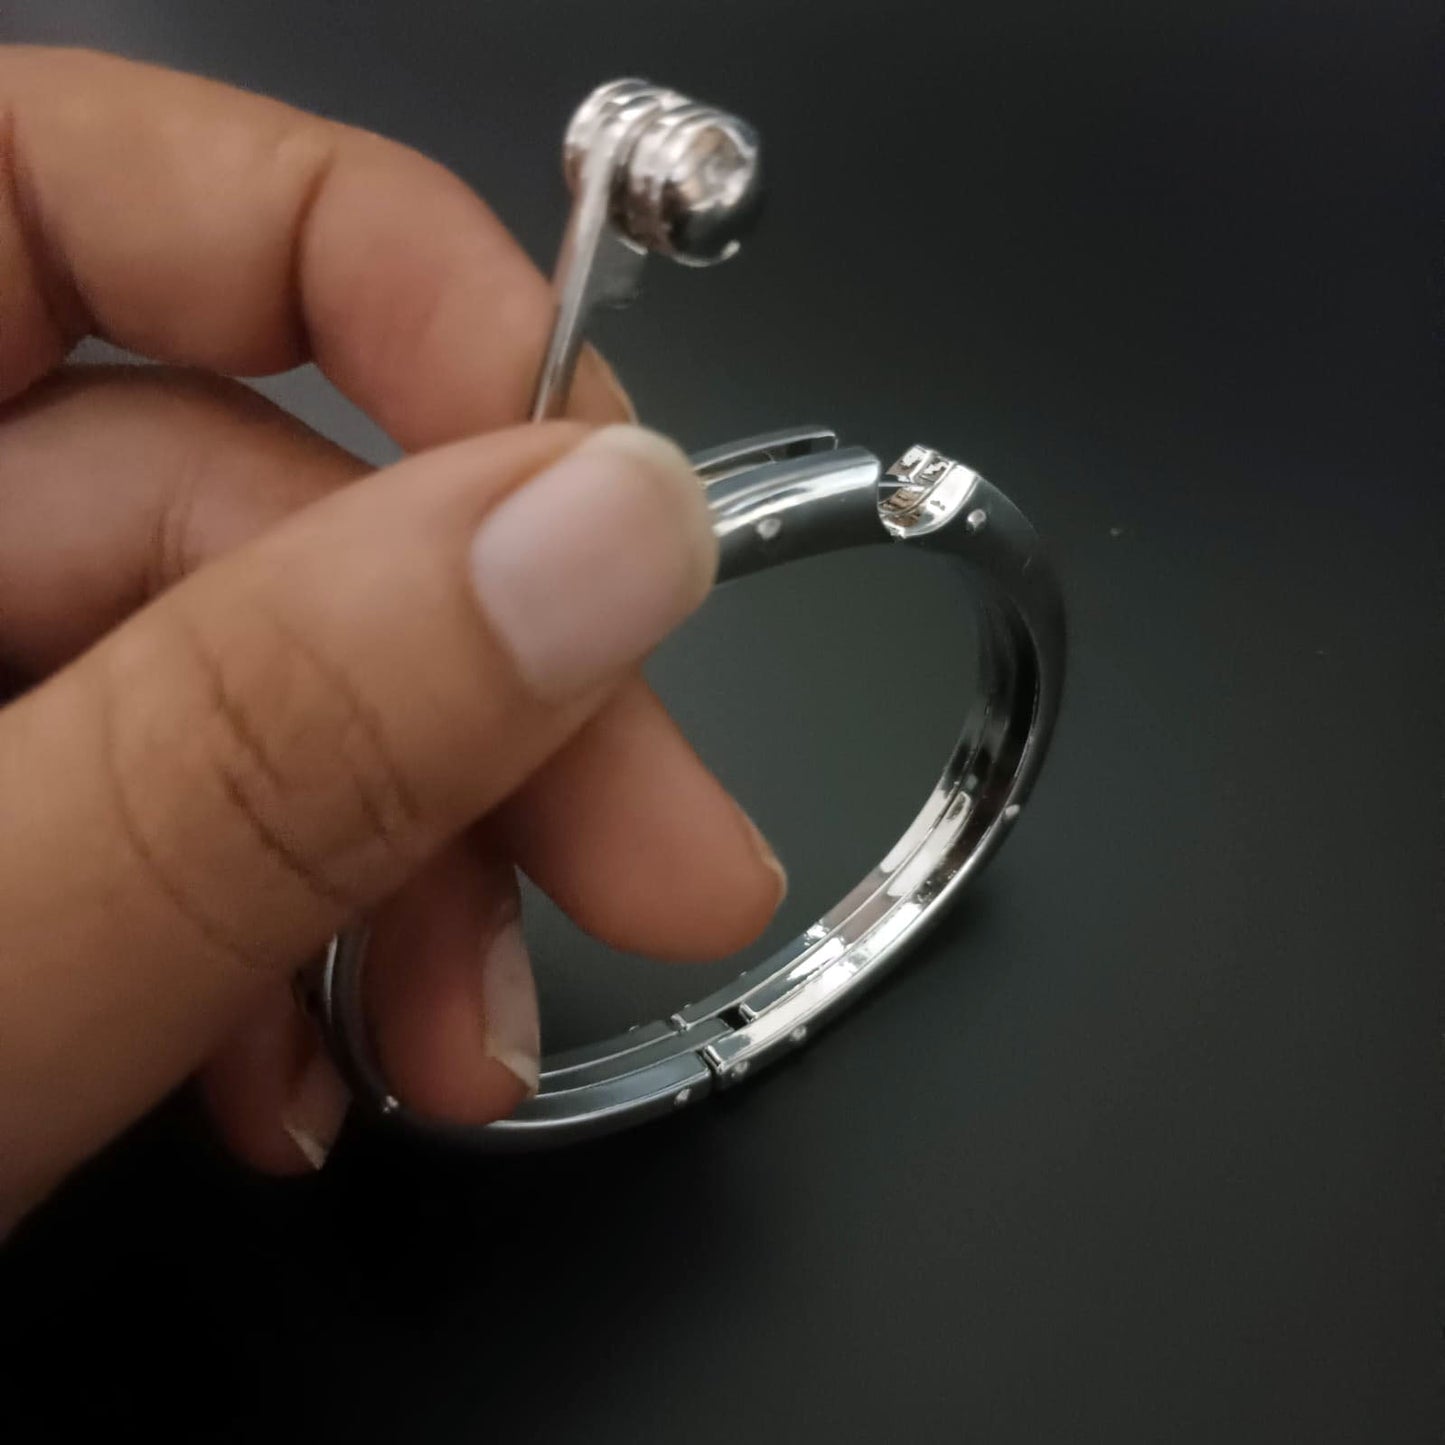 New Silver Handcuff Bracelet For Men